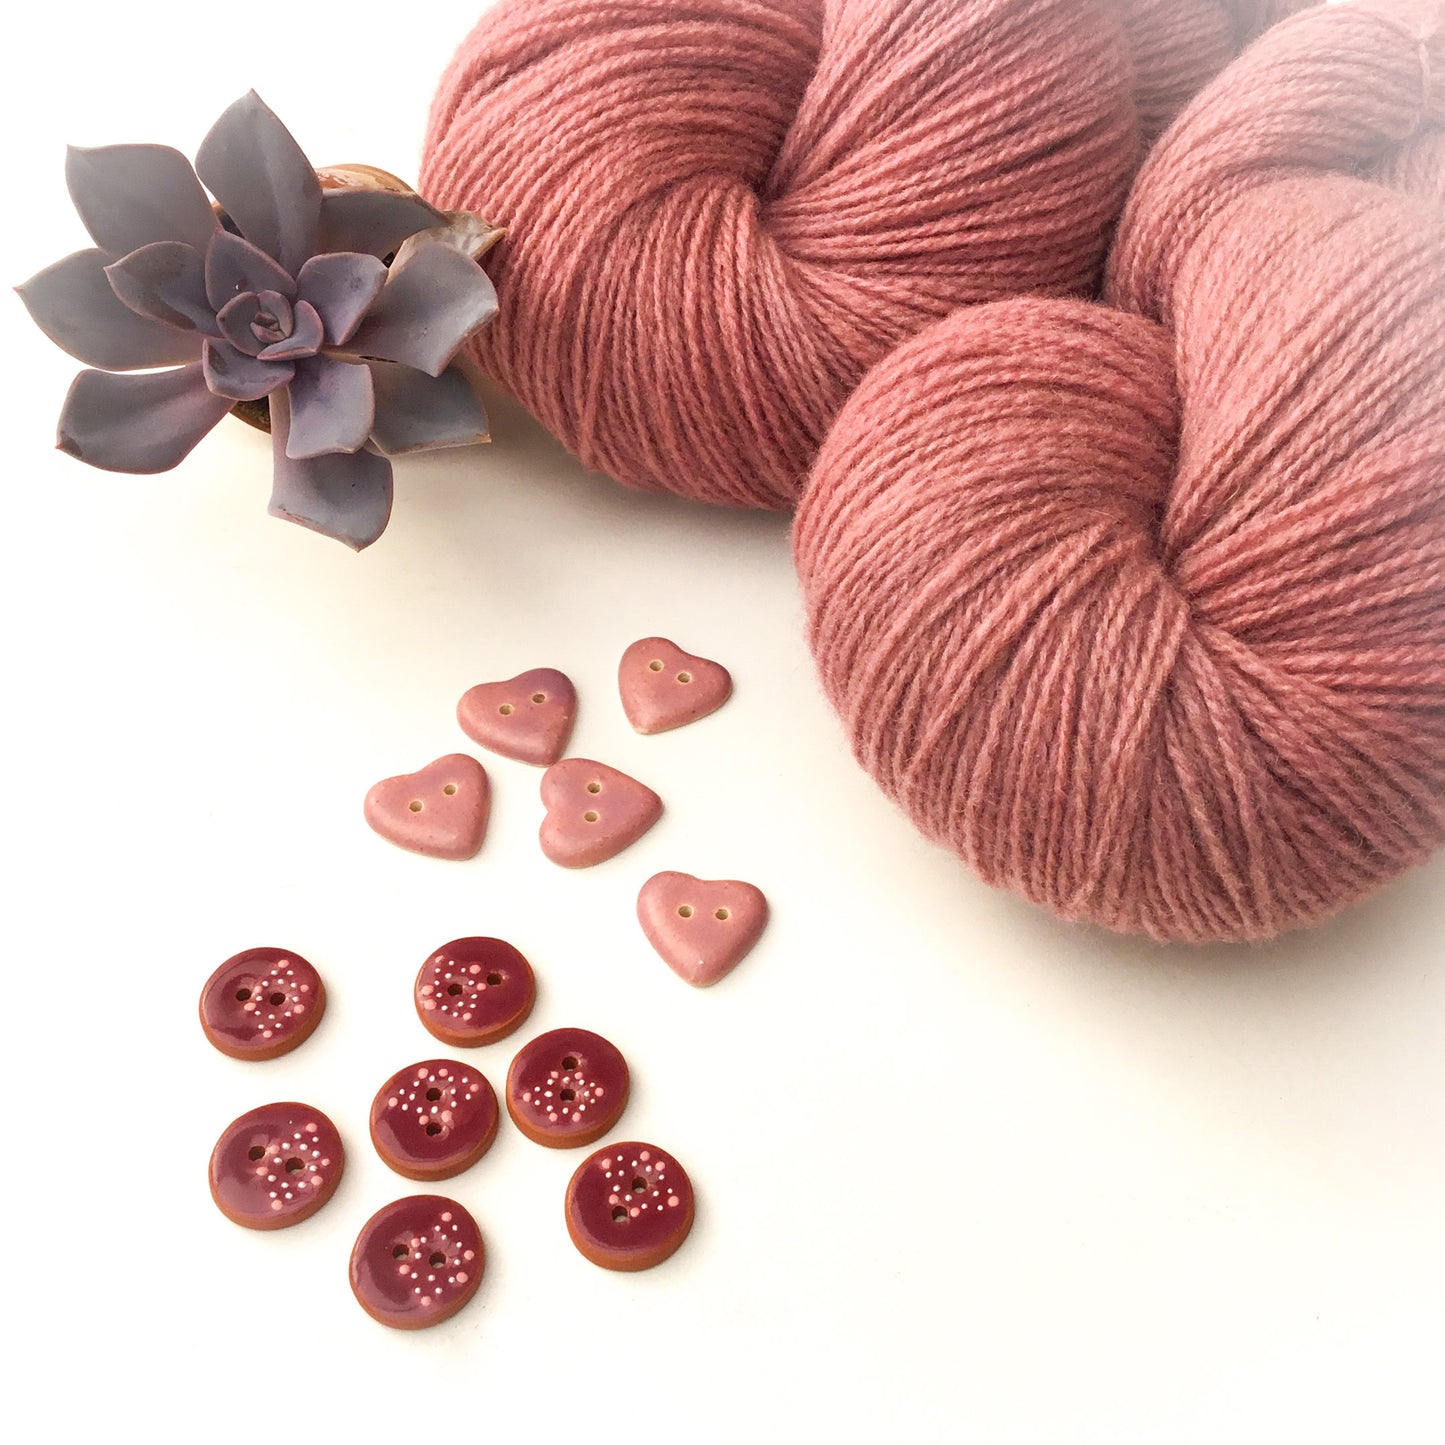 Pink Grape Fingering Wool Yarn (80 Merino/20 Romney) 2 ply - 4 oz skein